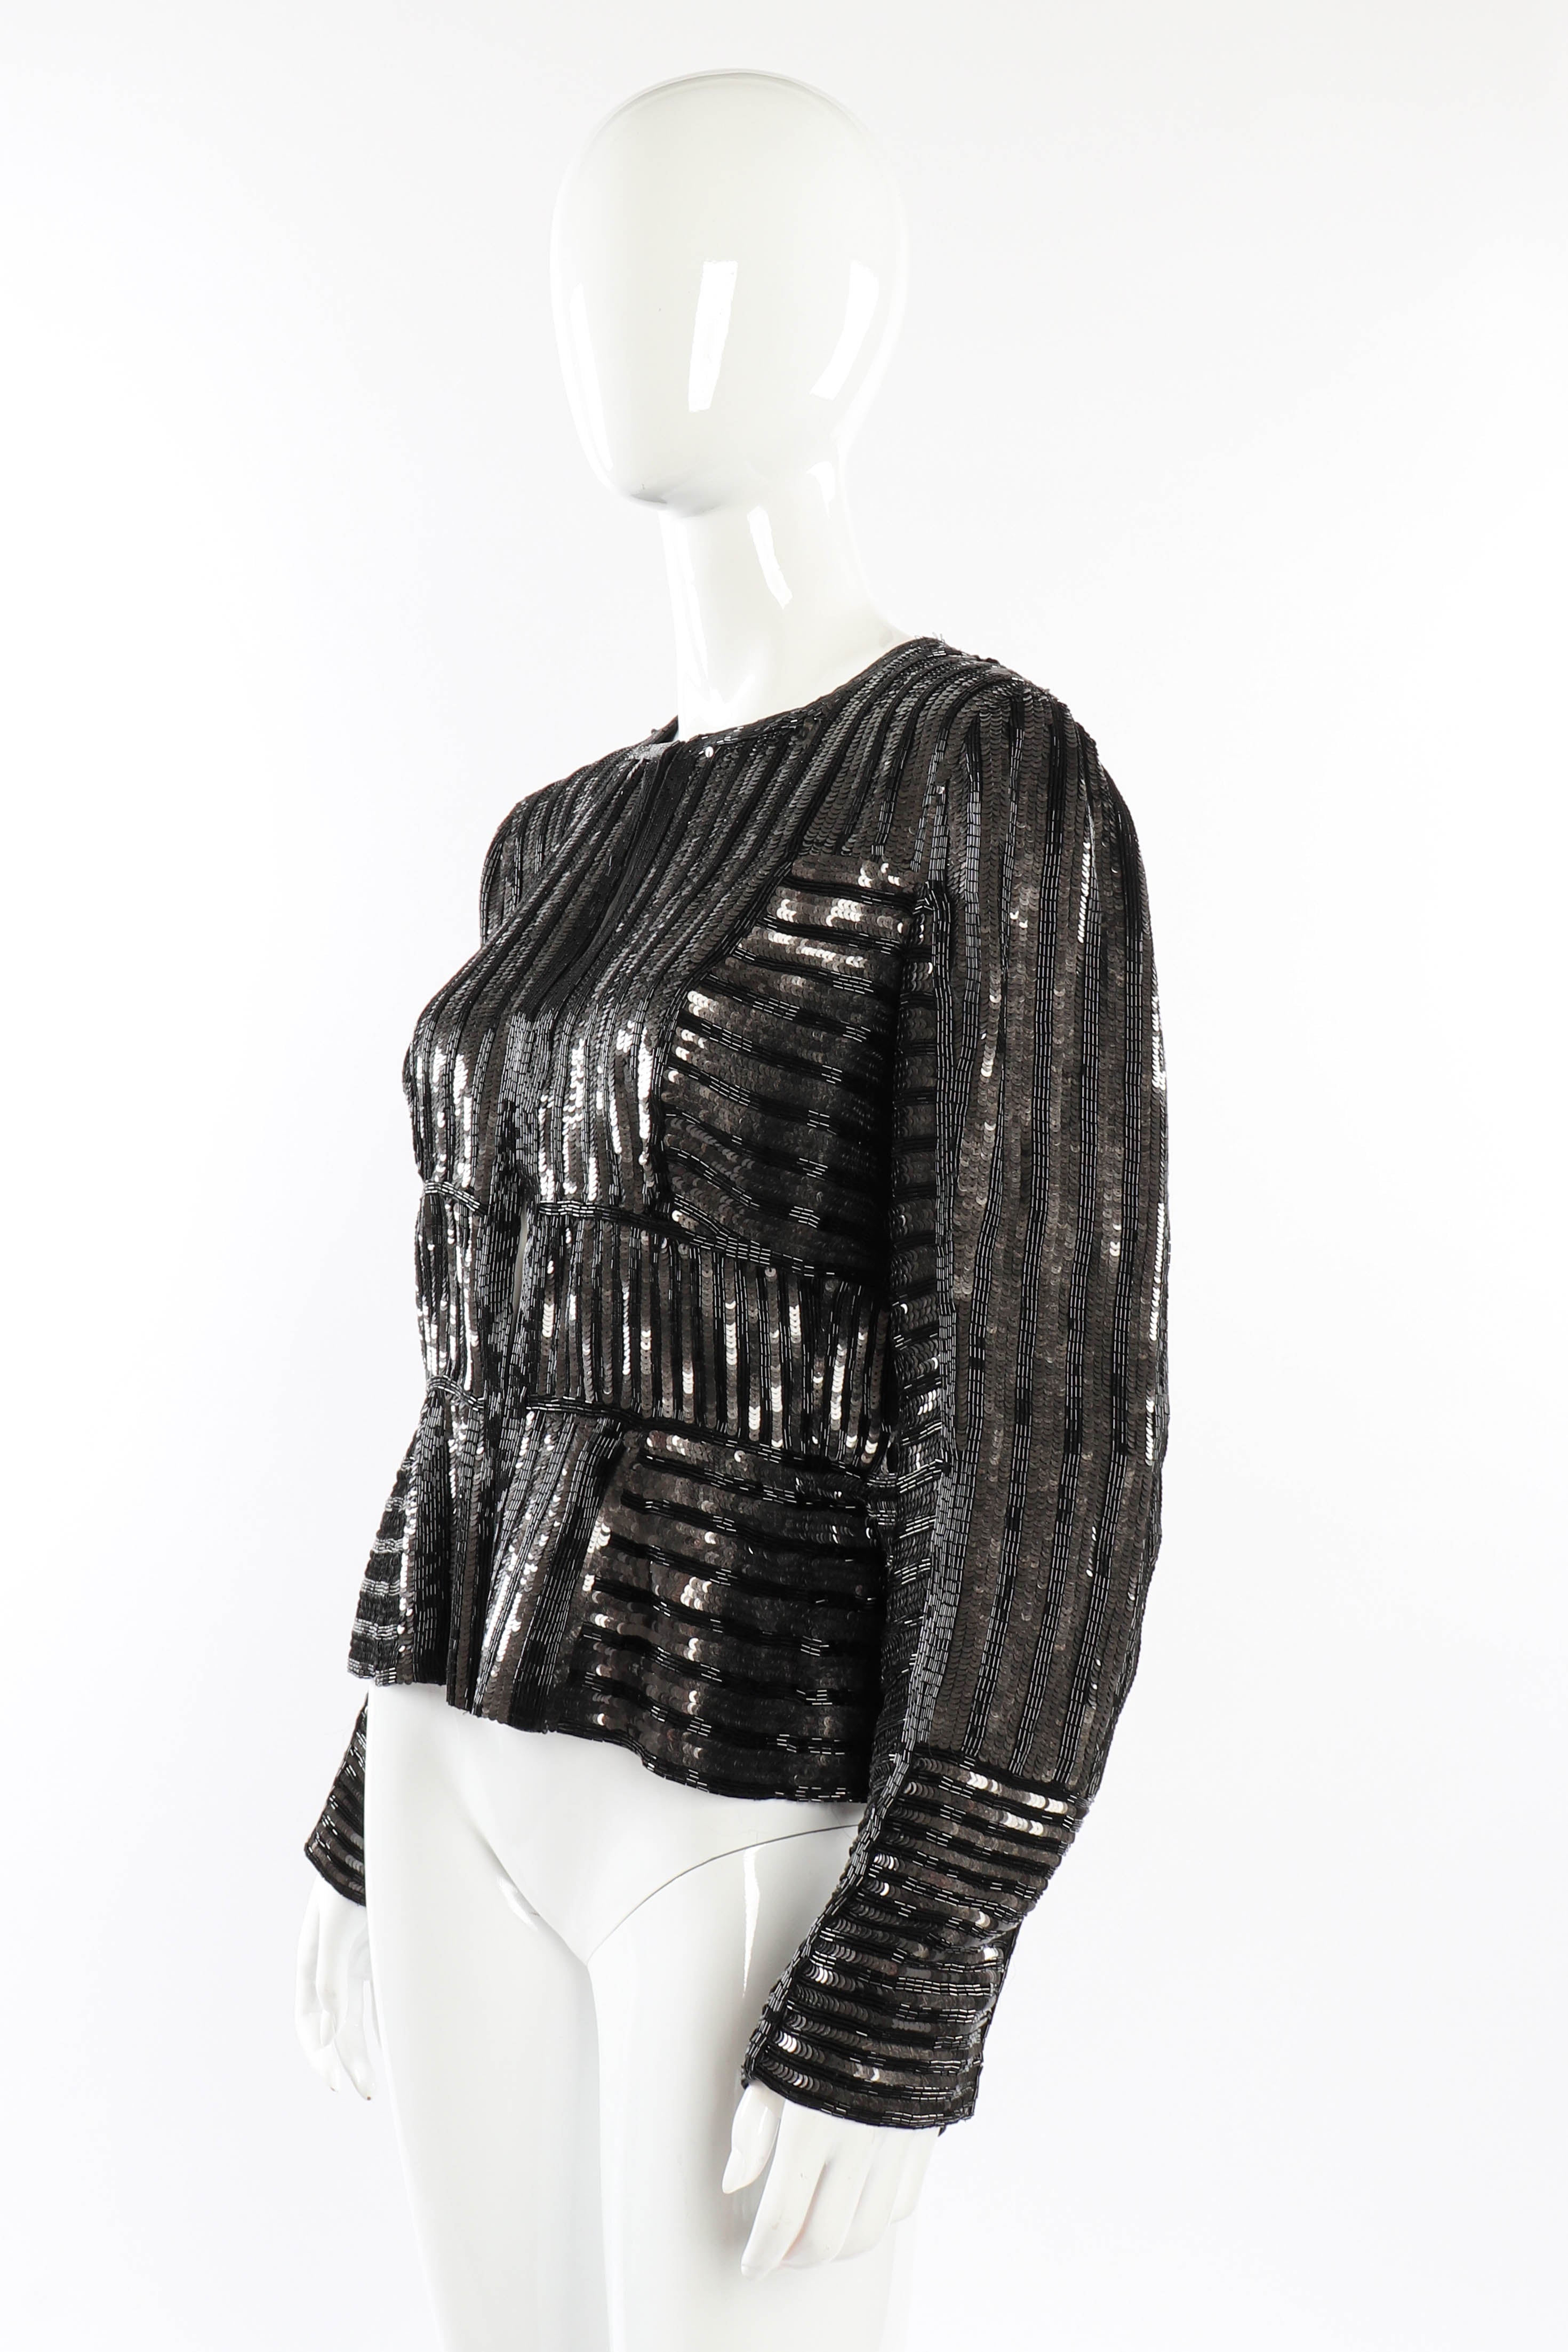 Vintage Gianfranco Ferre Sequin Stripe Jacket 3/4 front on mannequin @recessla